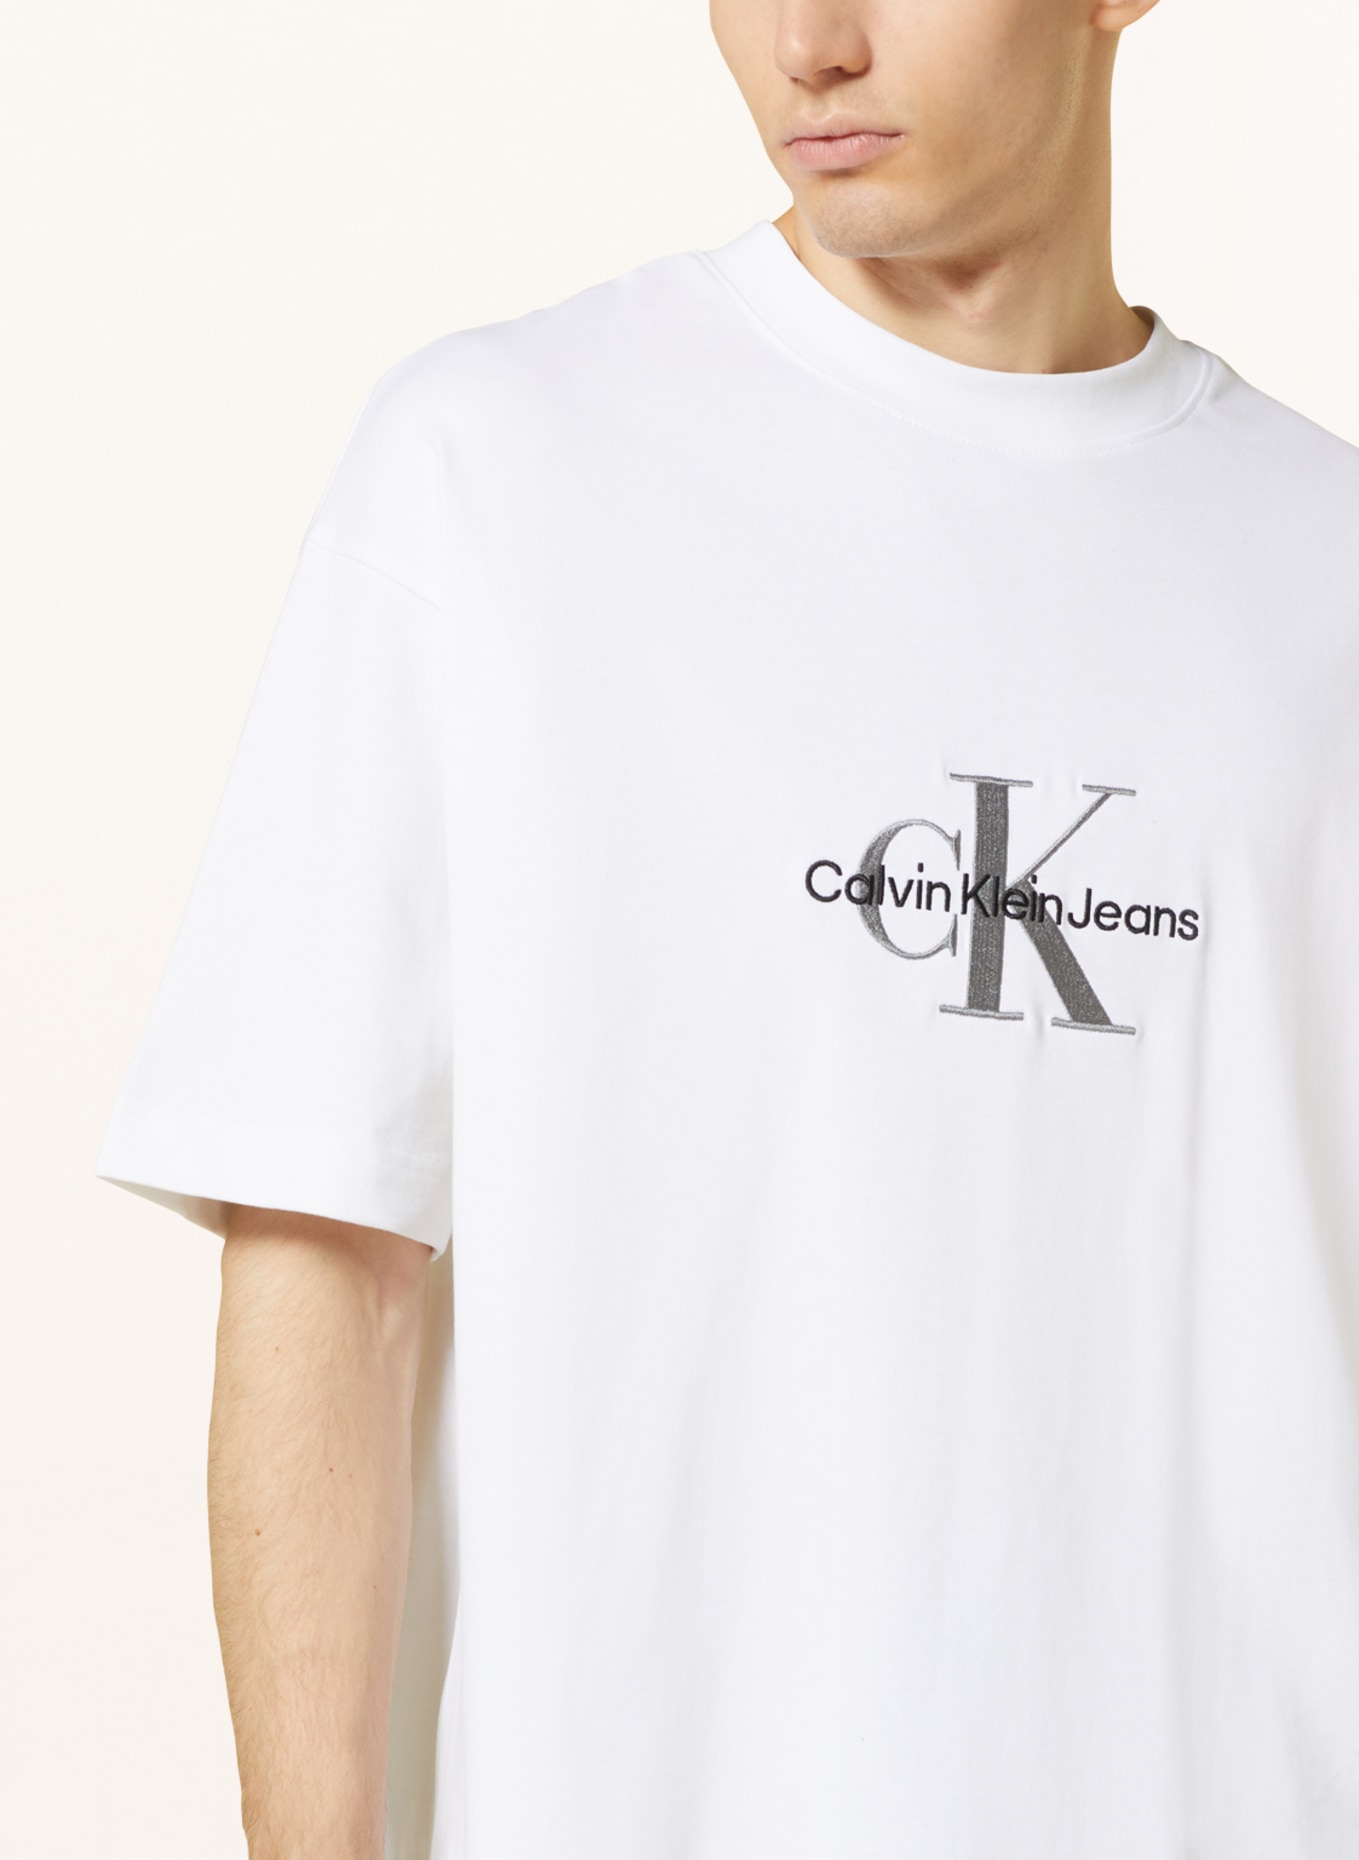 Calvin Klein Jeans T-shirt in white